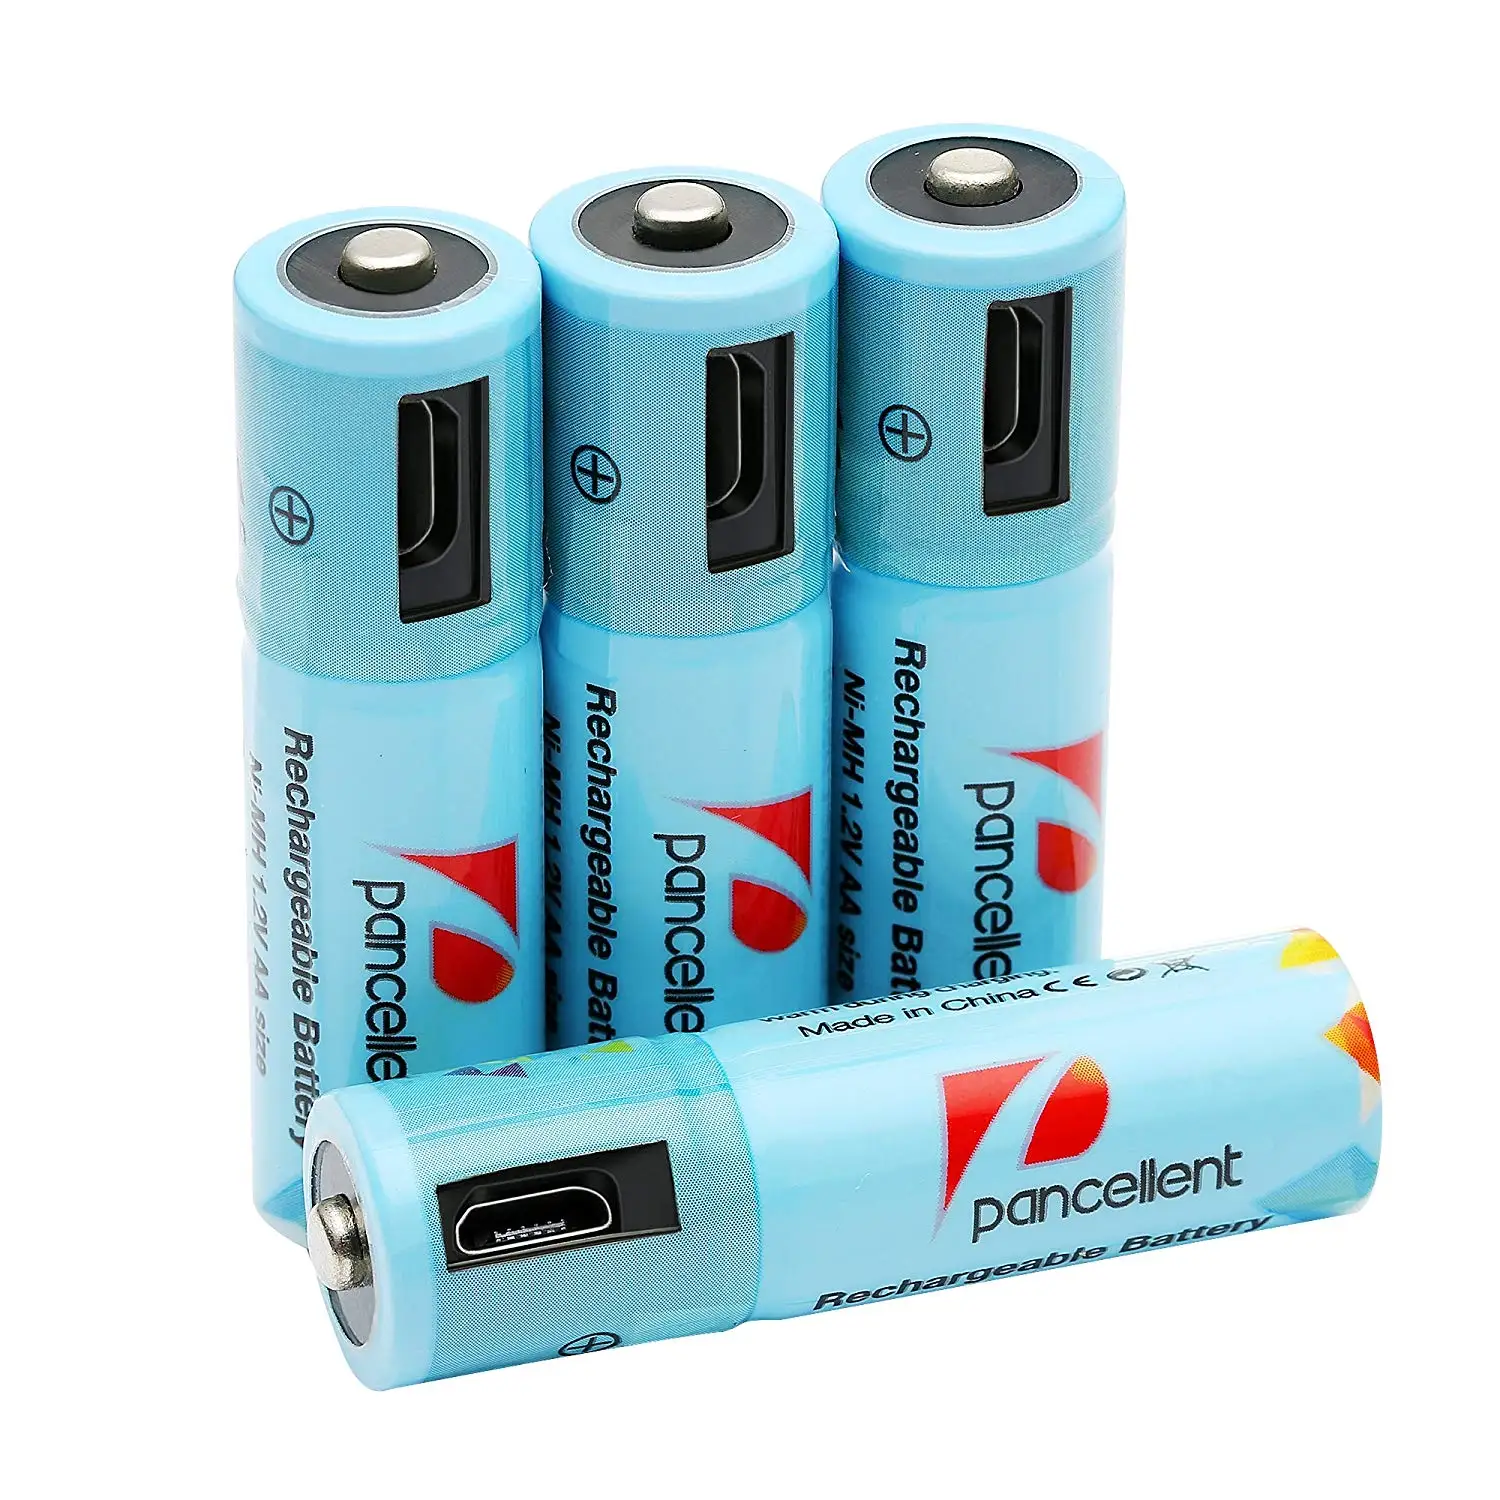 Usb battery